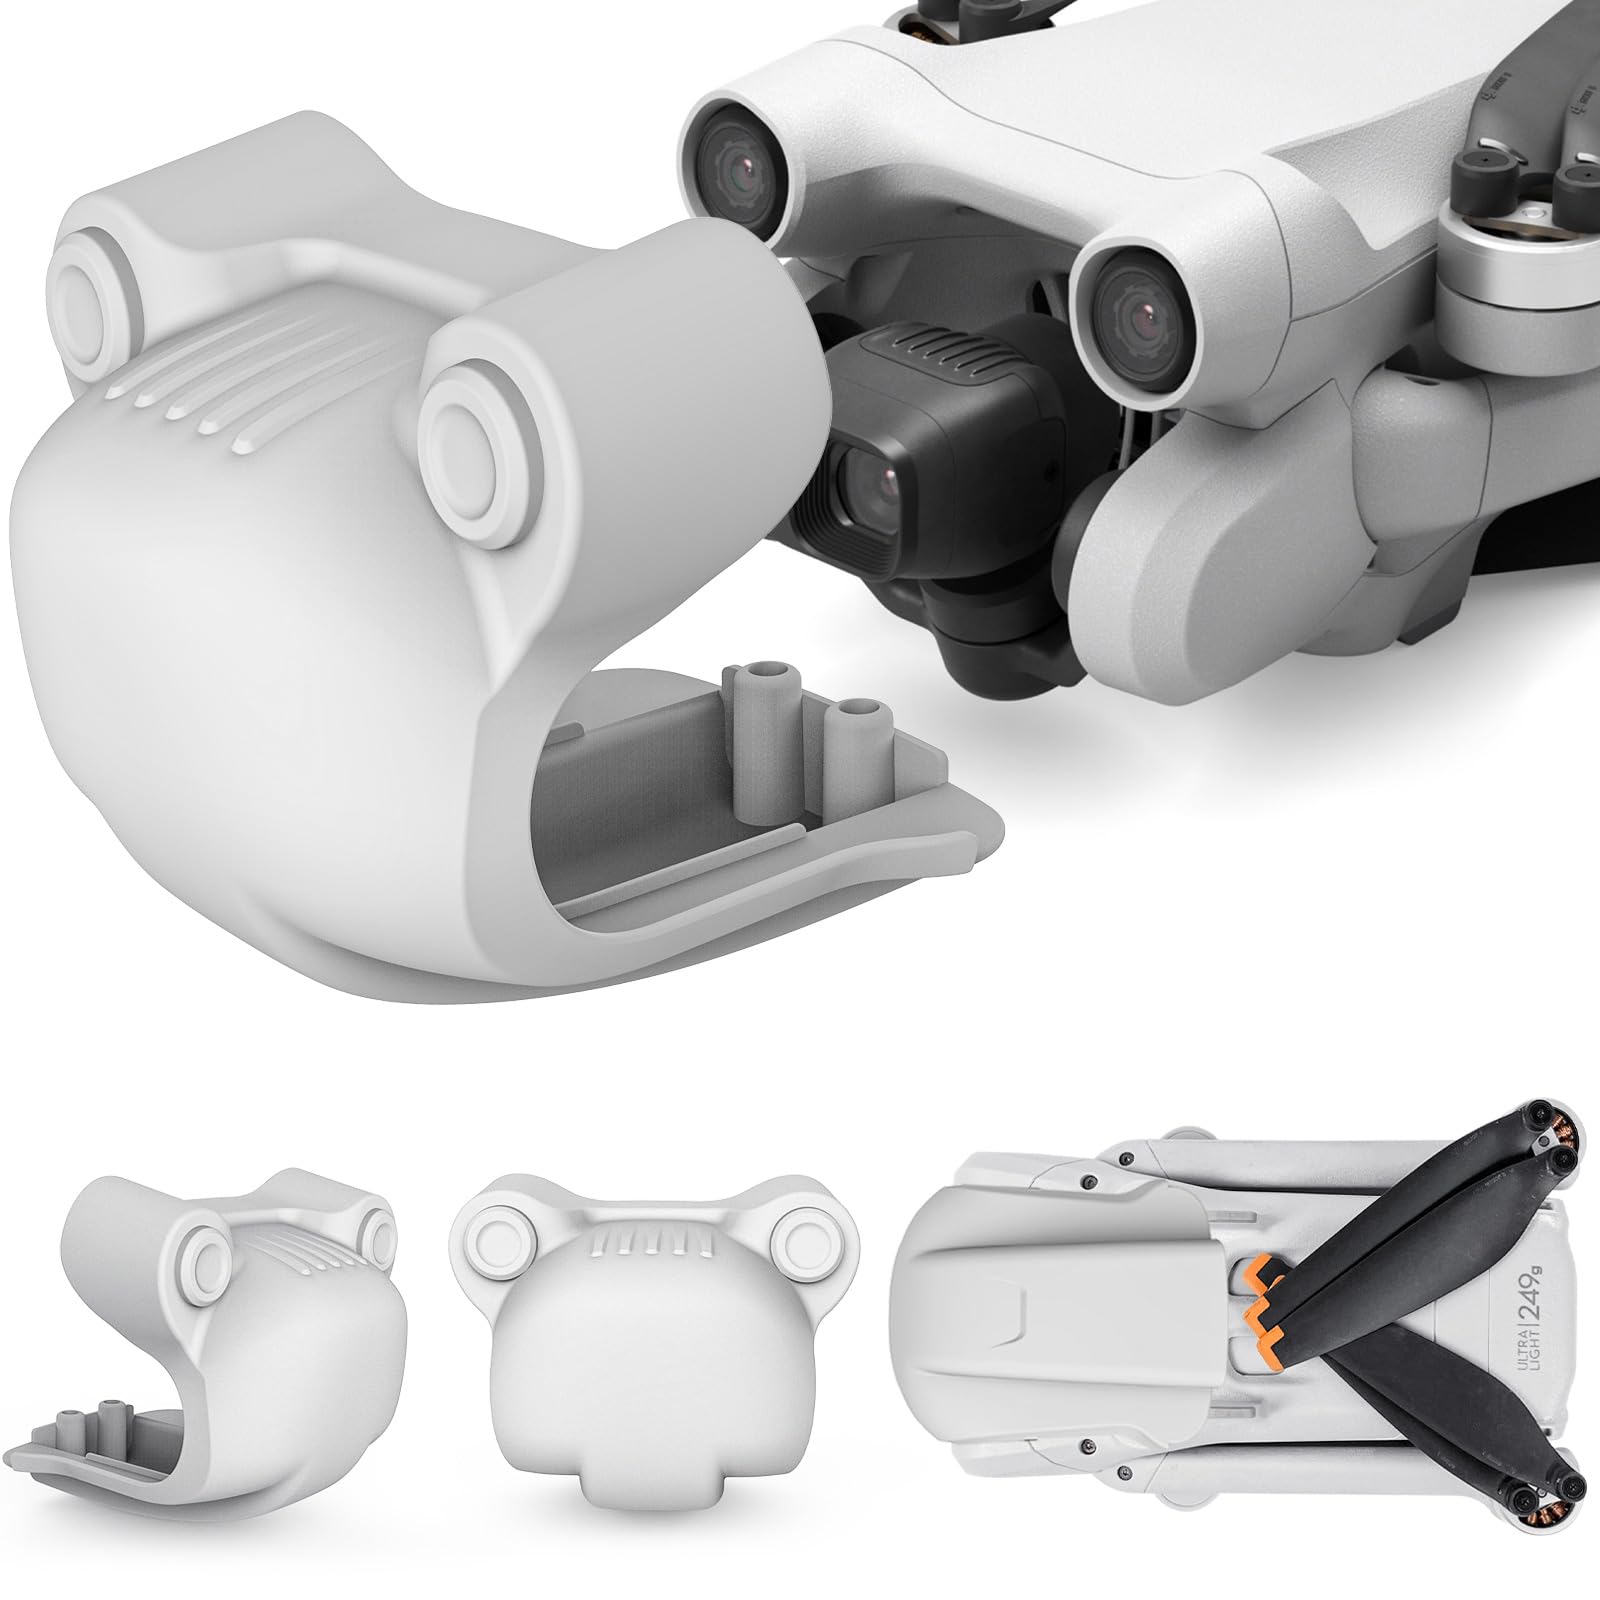 FPVtosky Mini 3 Pro Objektivdeckelabdeckung, Gimbal Protector & Frontward Downward Vision Sensoren Protector Guard für DJI Mini 3 Pro Drone Ersatz Zubehör von FPVtosky